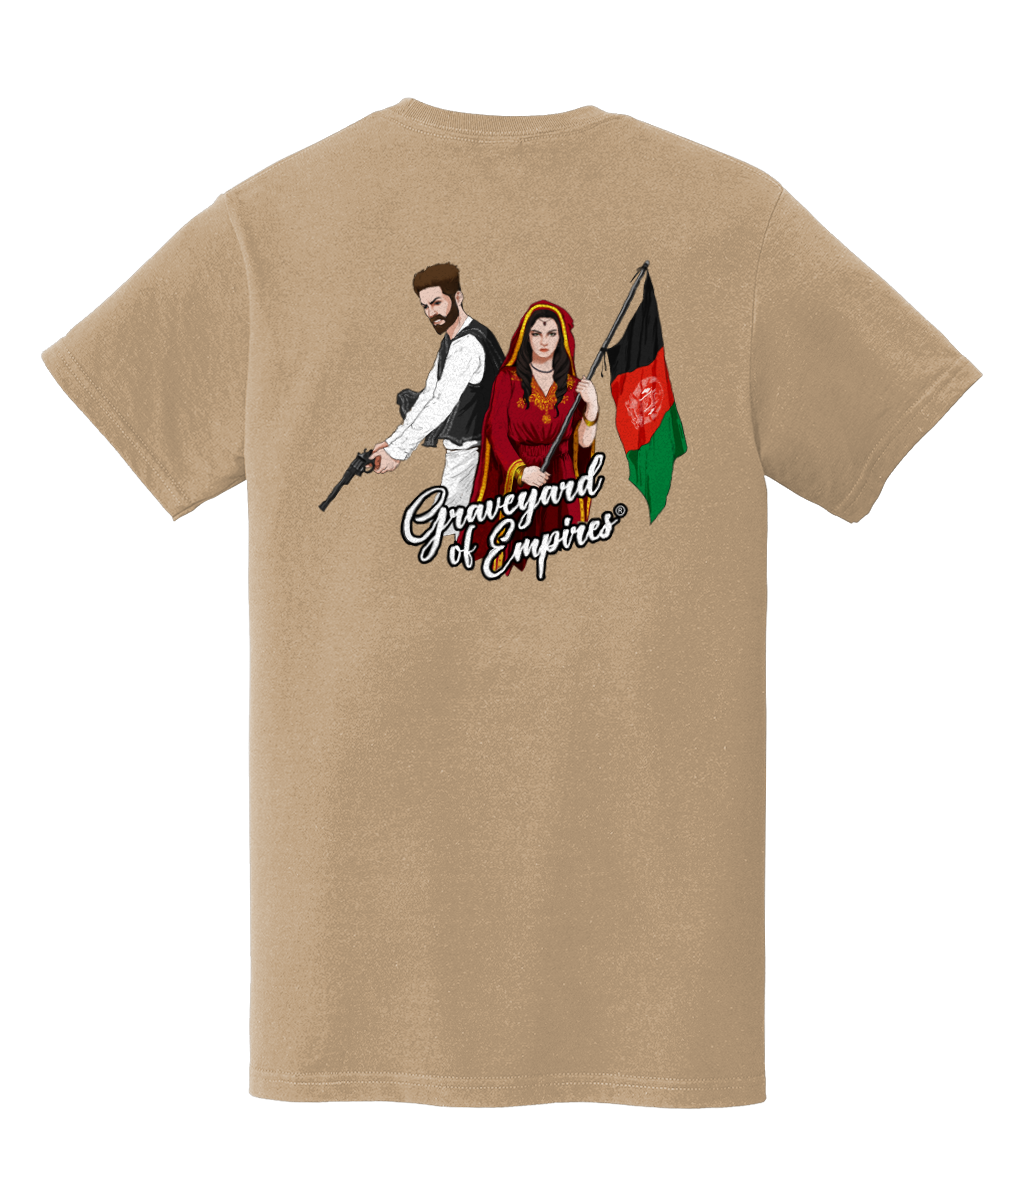 "Malalai of Maiwand" T-Shirt